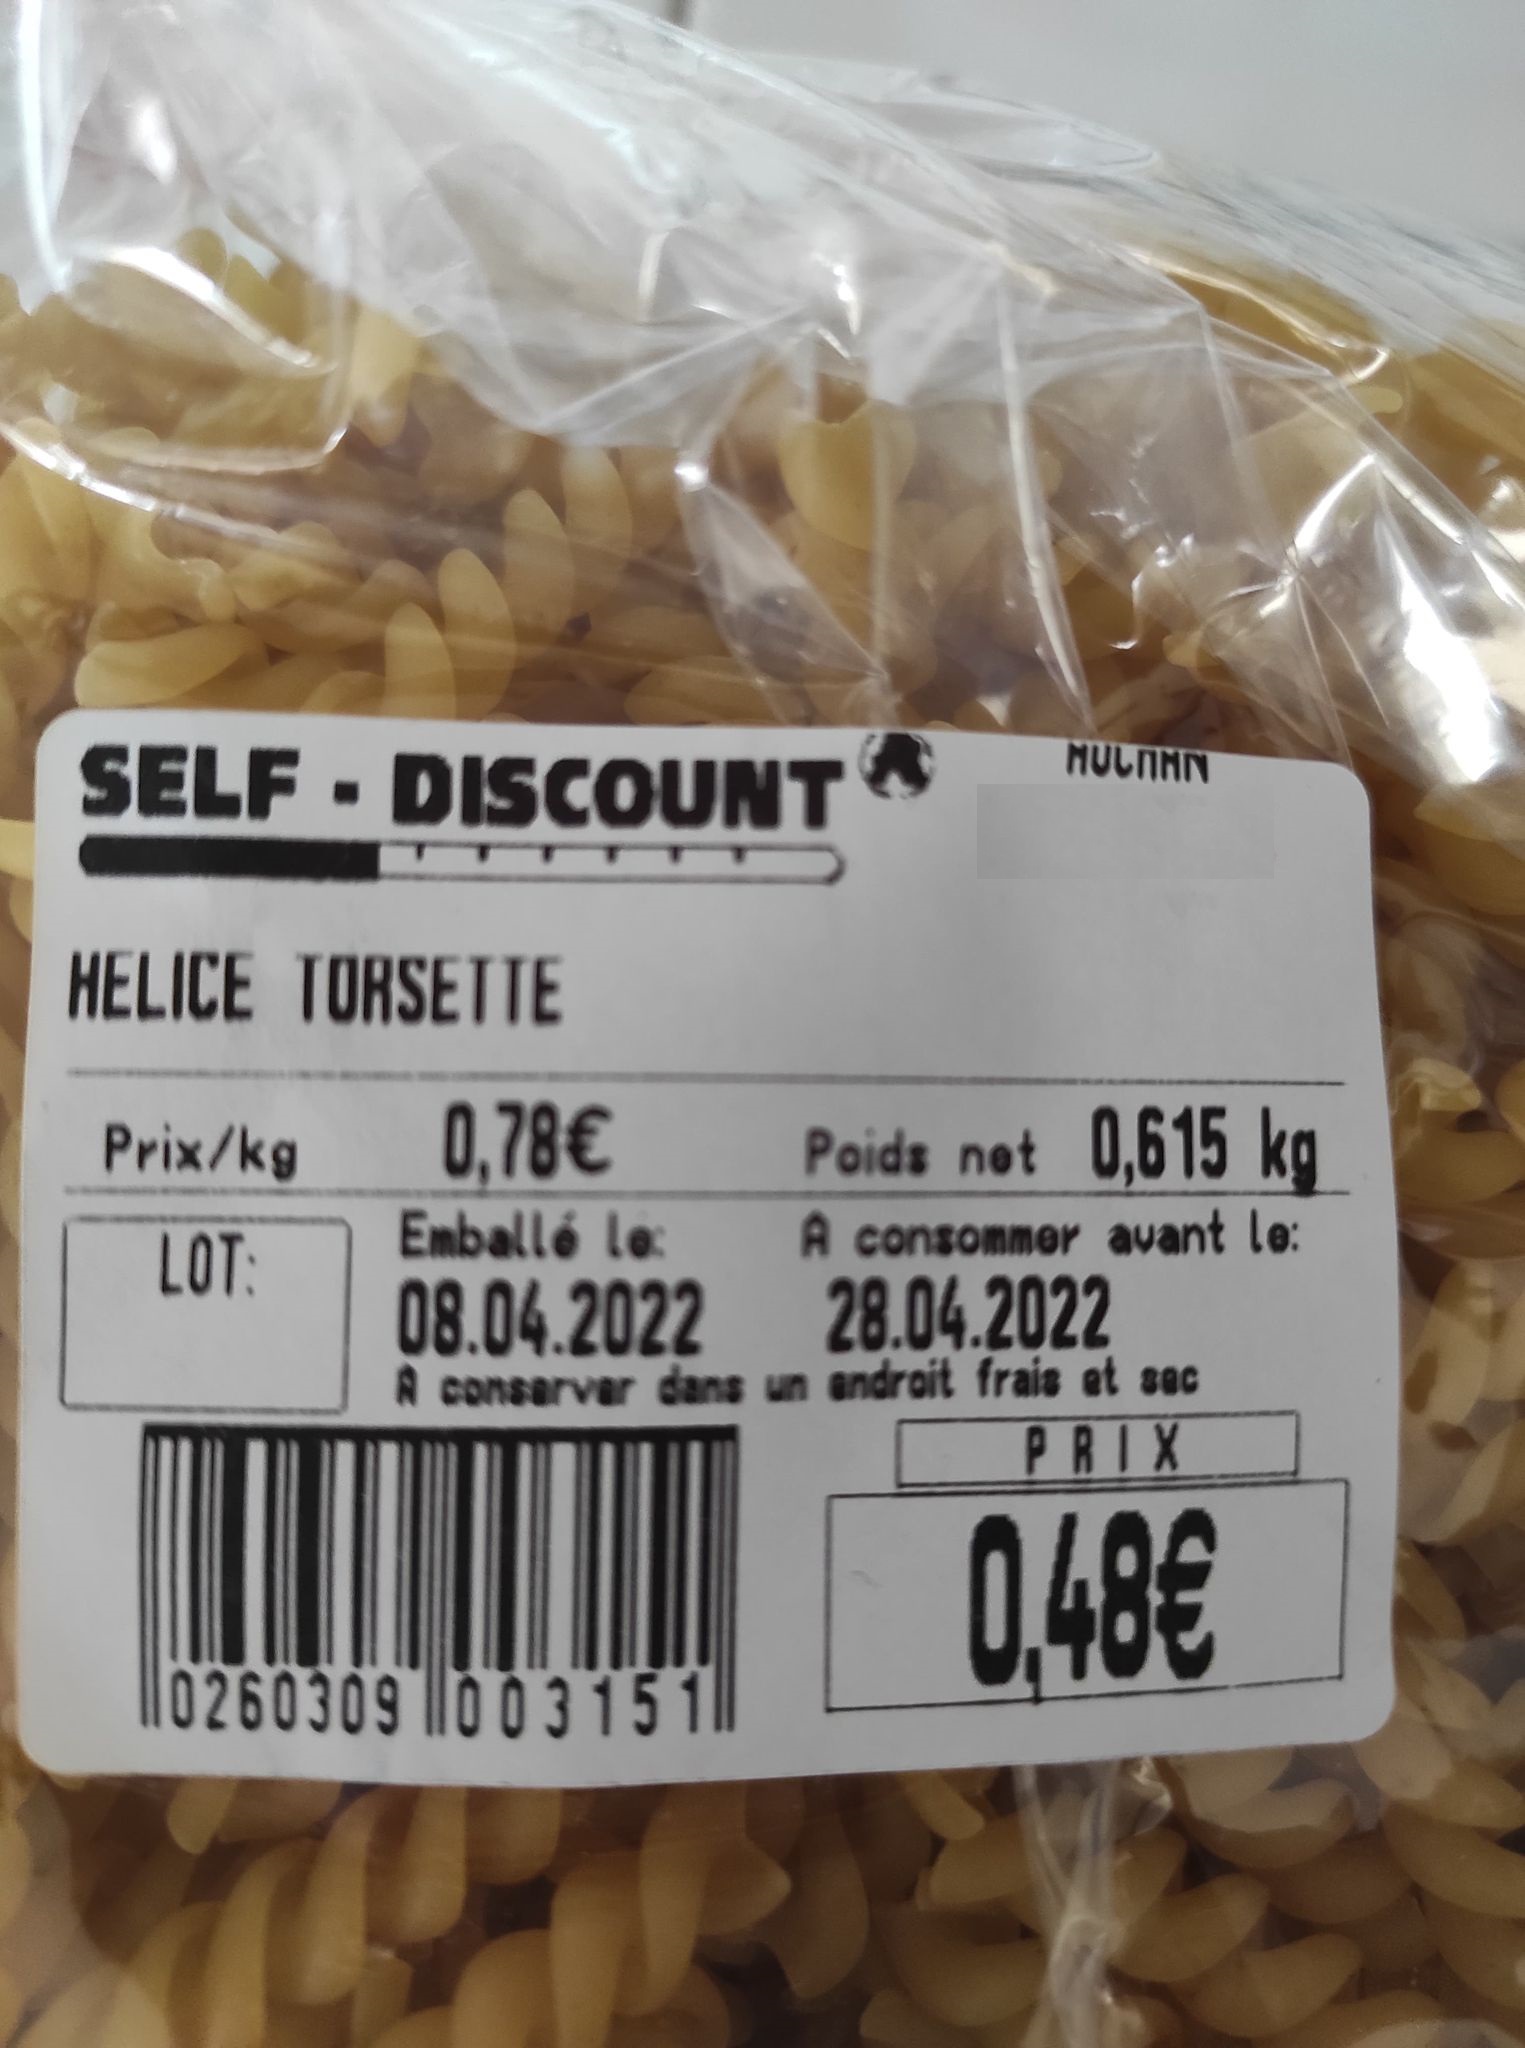 Torsette pâte discount 